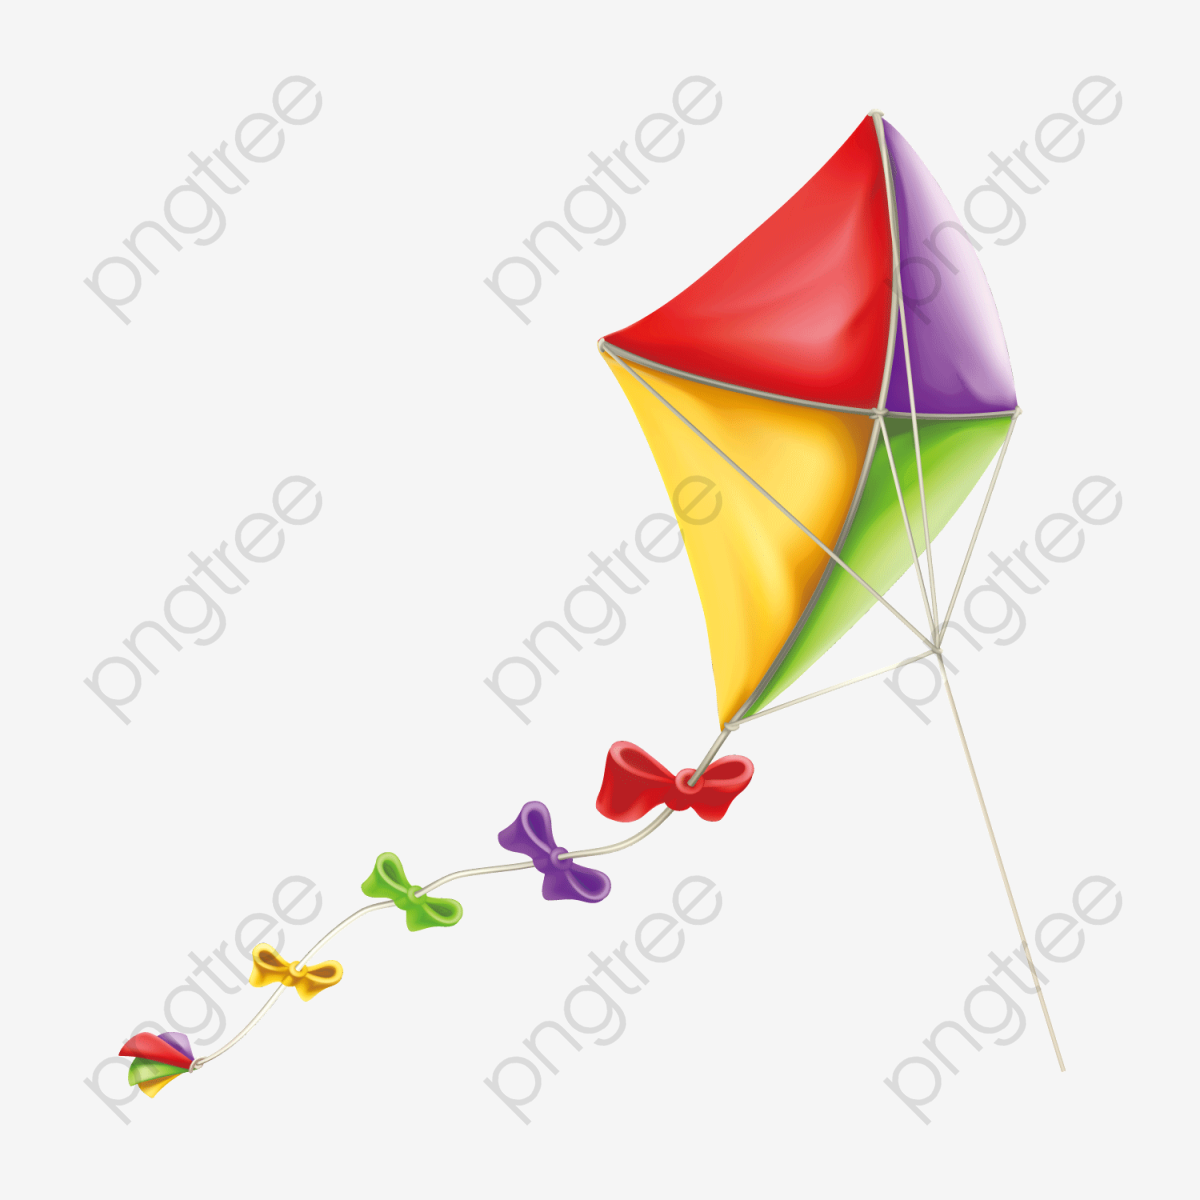 kite clipart colored